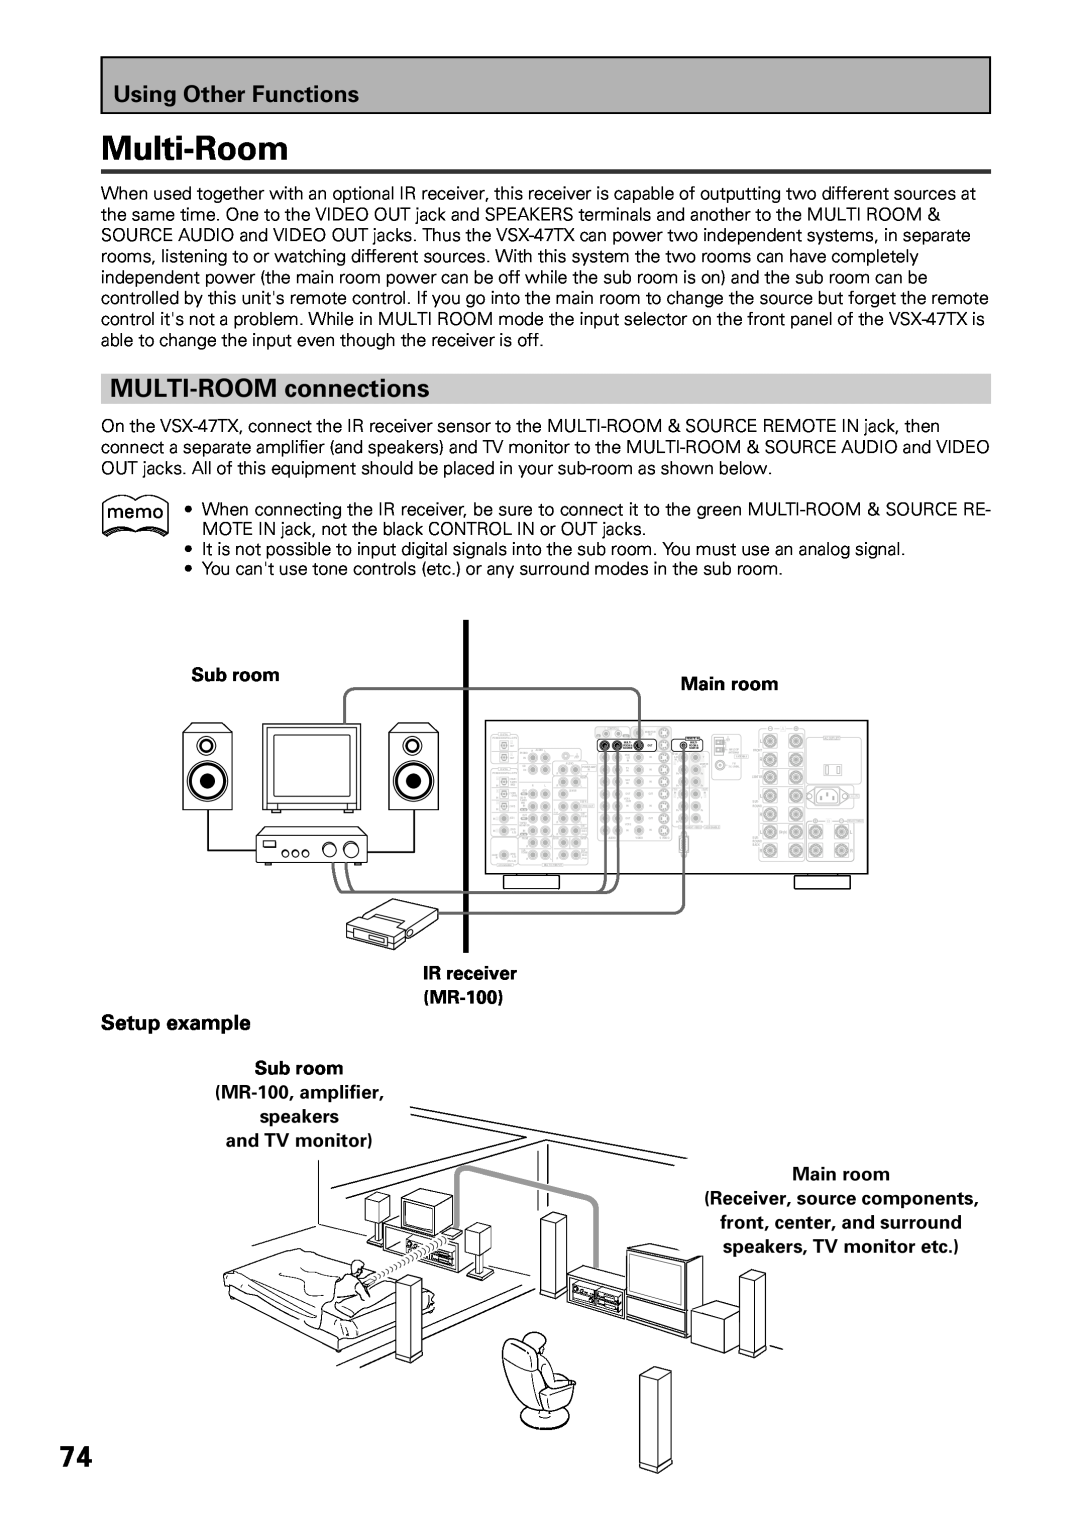 Pioneer VSX-47TX manual Multi-Room, MULTI-ROOMconnections, Sub room, Main room, IR receiver MR-100 